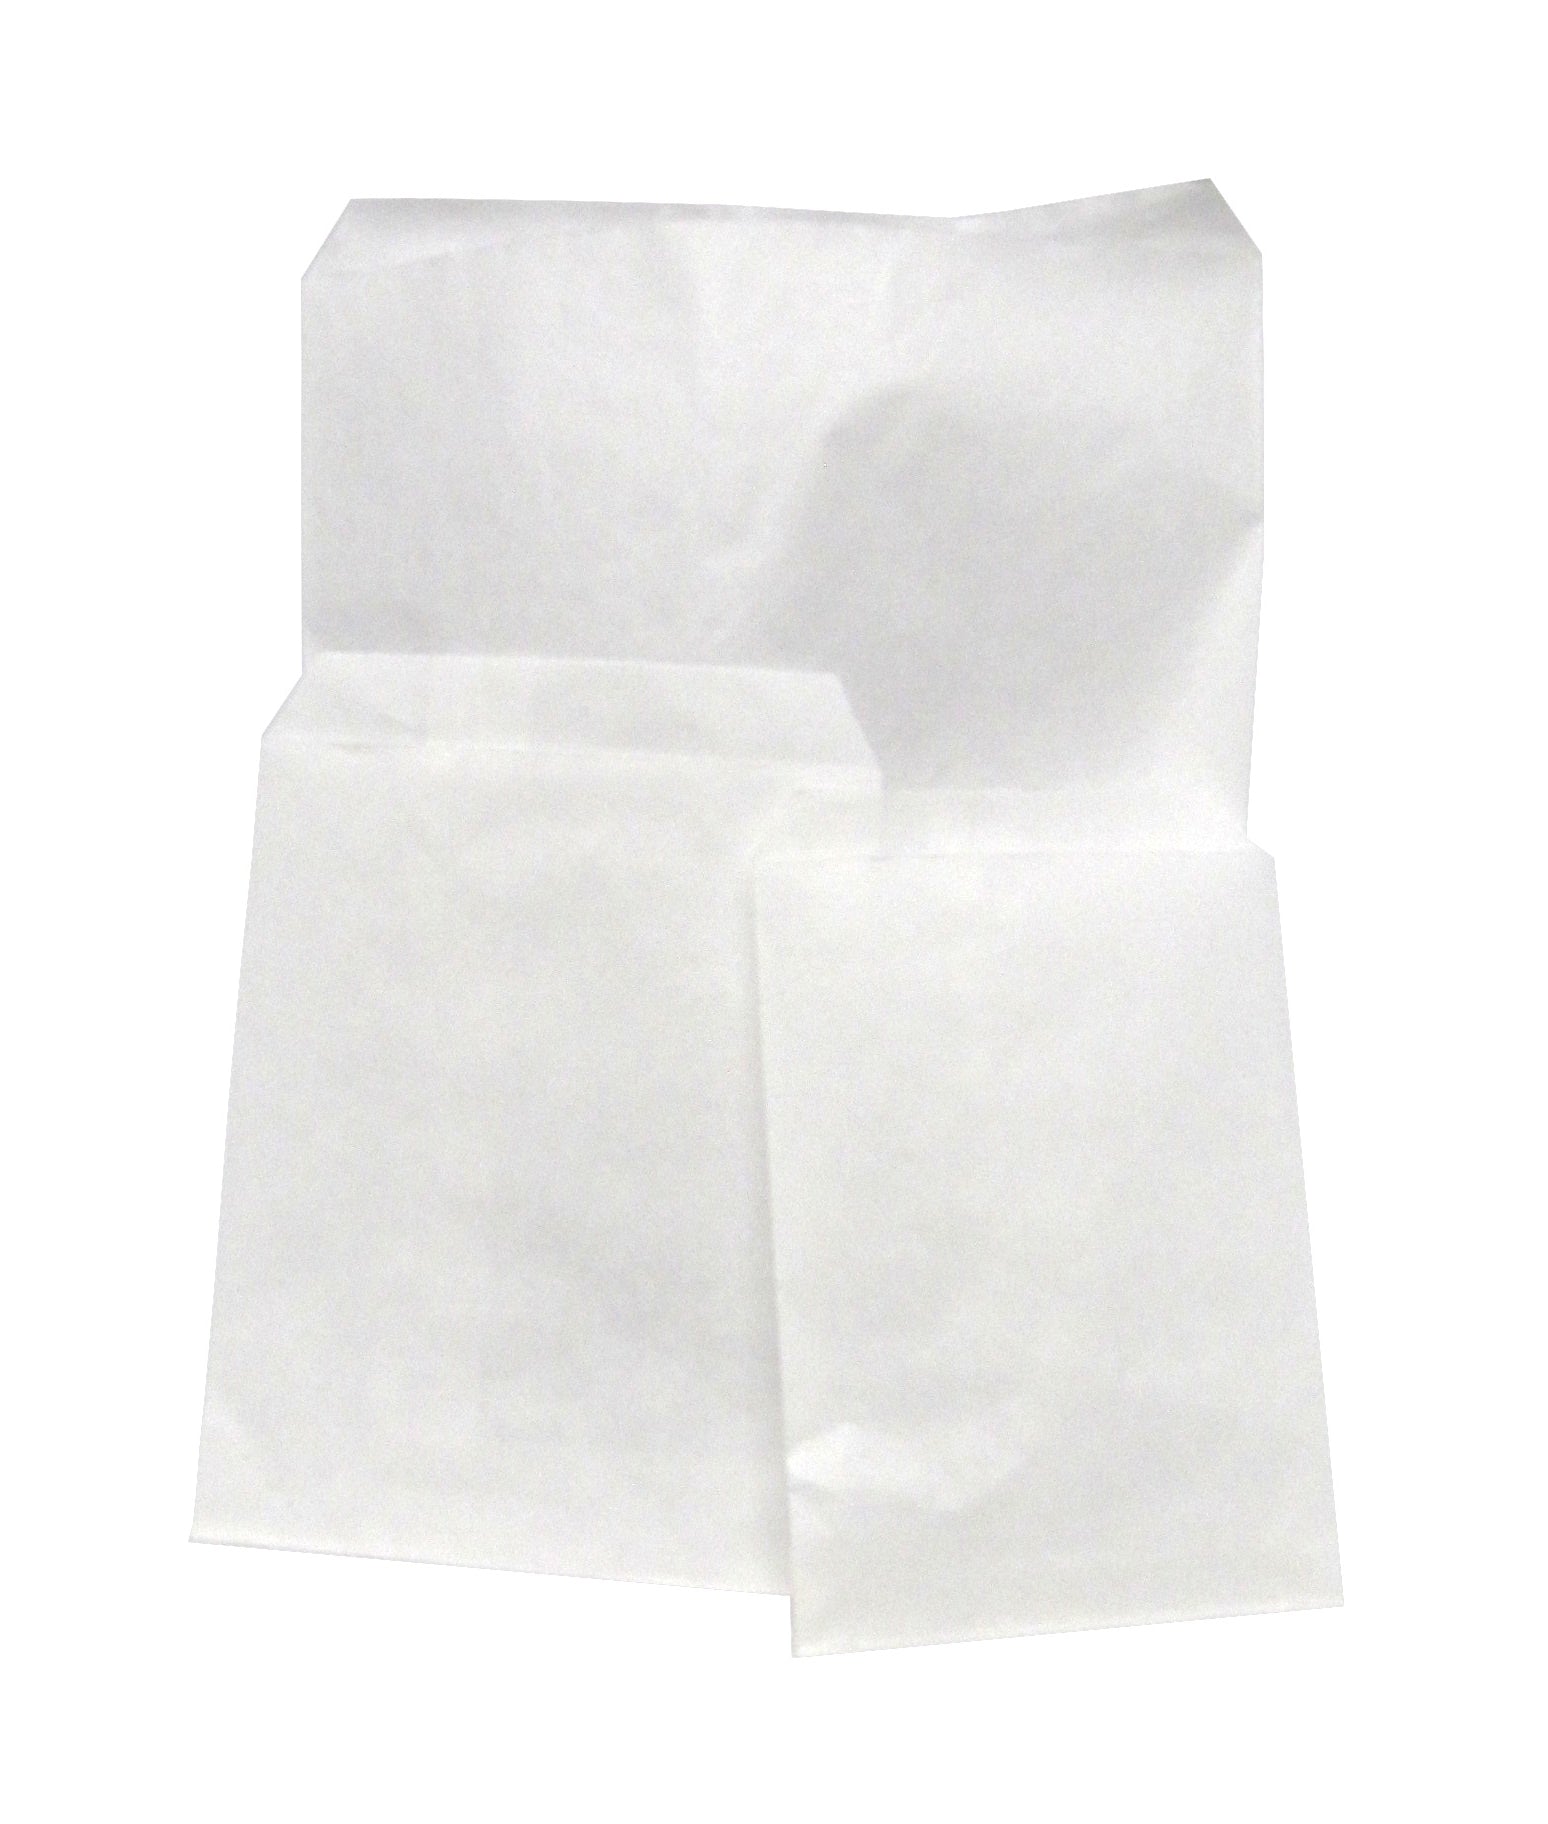 DittaDisplay Pochette fine matériau papier blanc frictionné Thin pouch made of white rubbed paper Dünner Beutel aus weißem geriebenem Papier